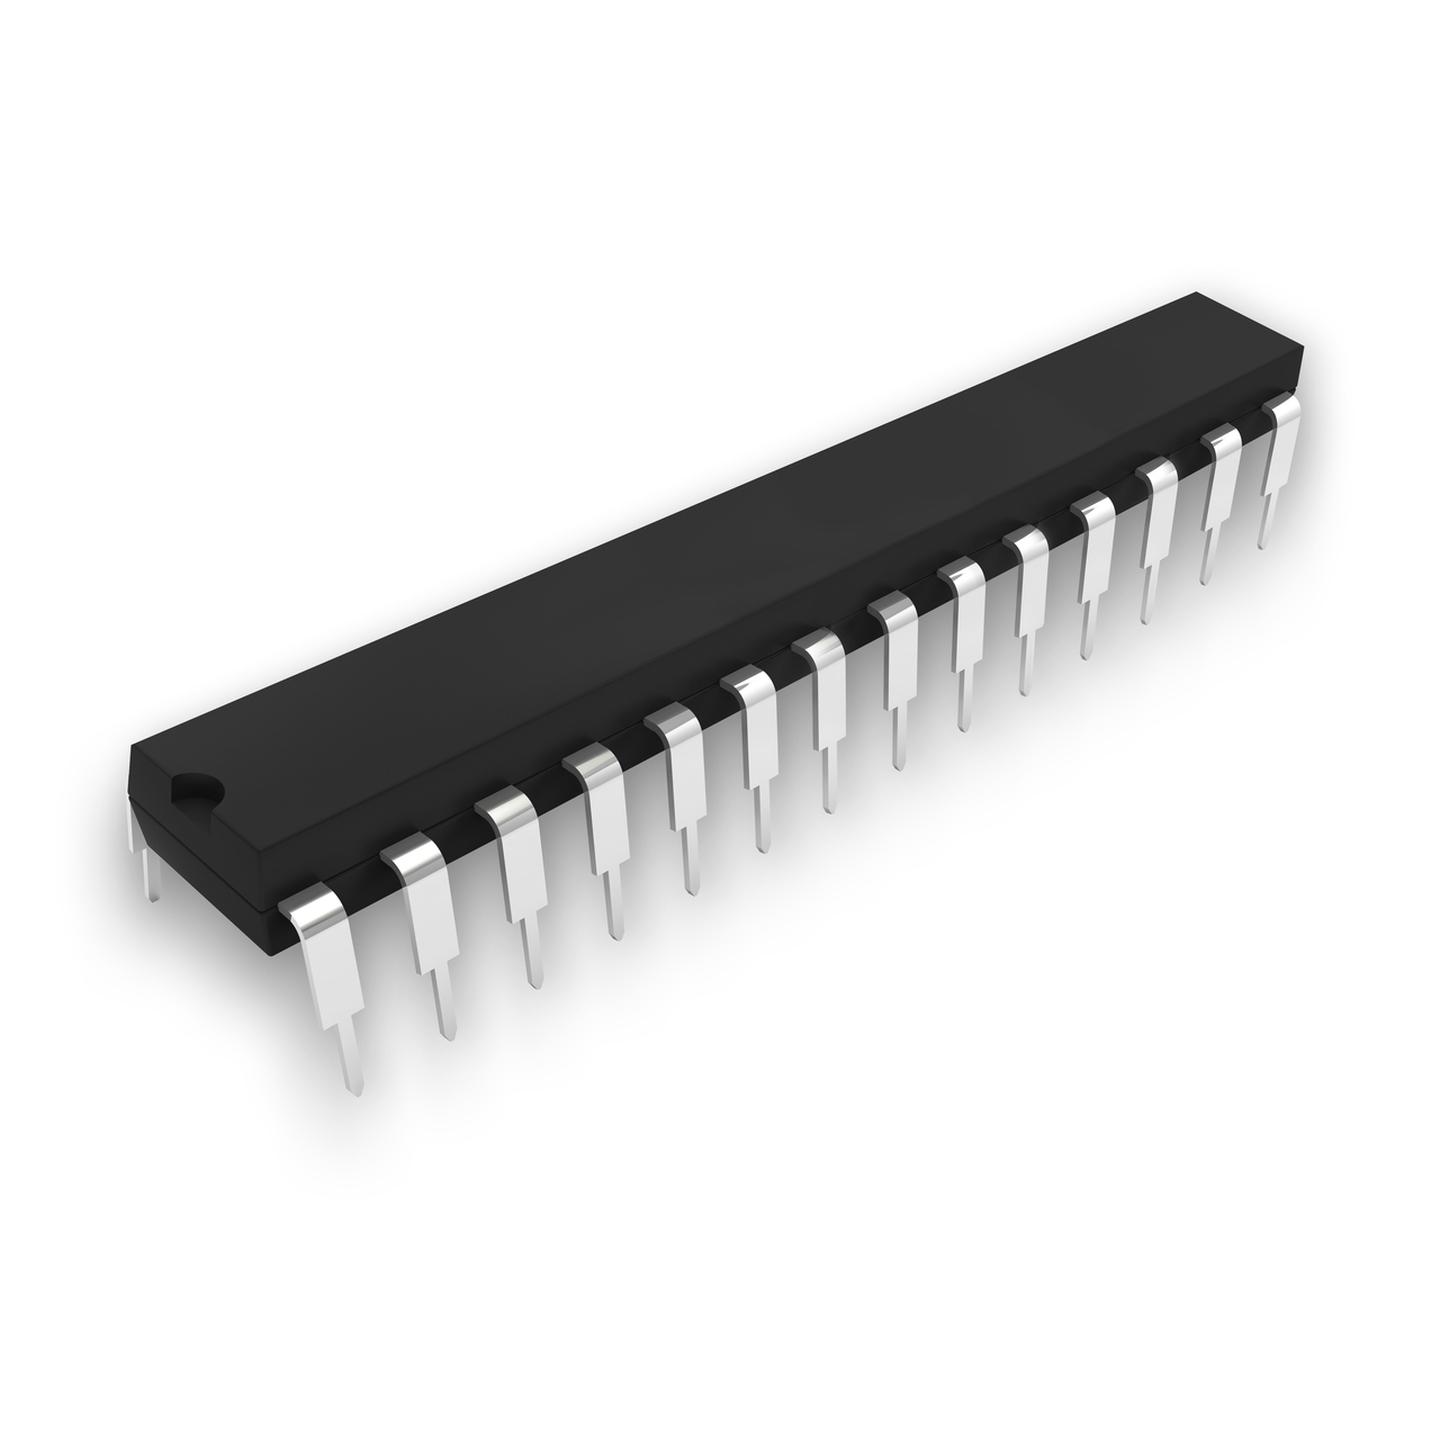 dsPIC33FJ128GP802I/SP PIC Microcontroller - DIP28